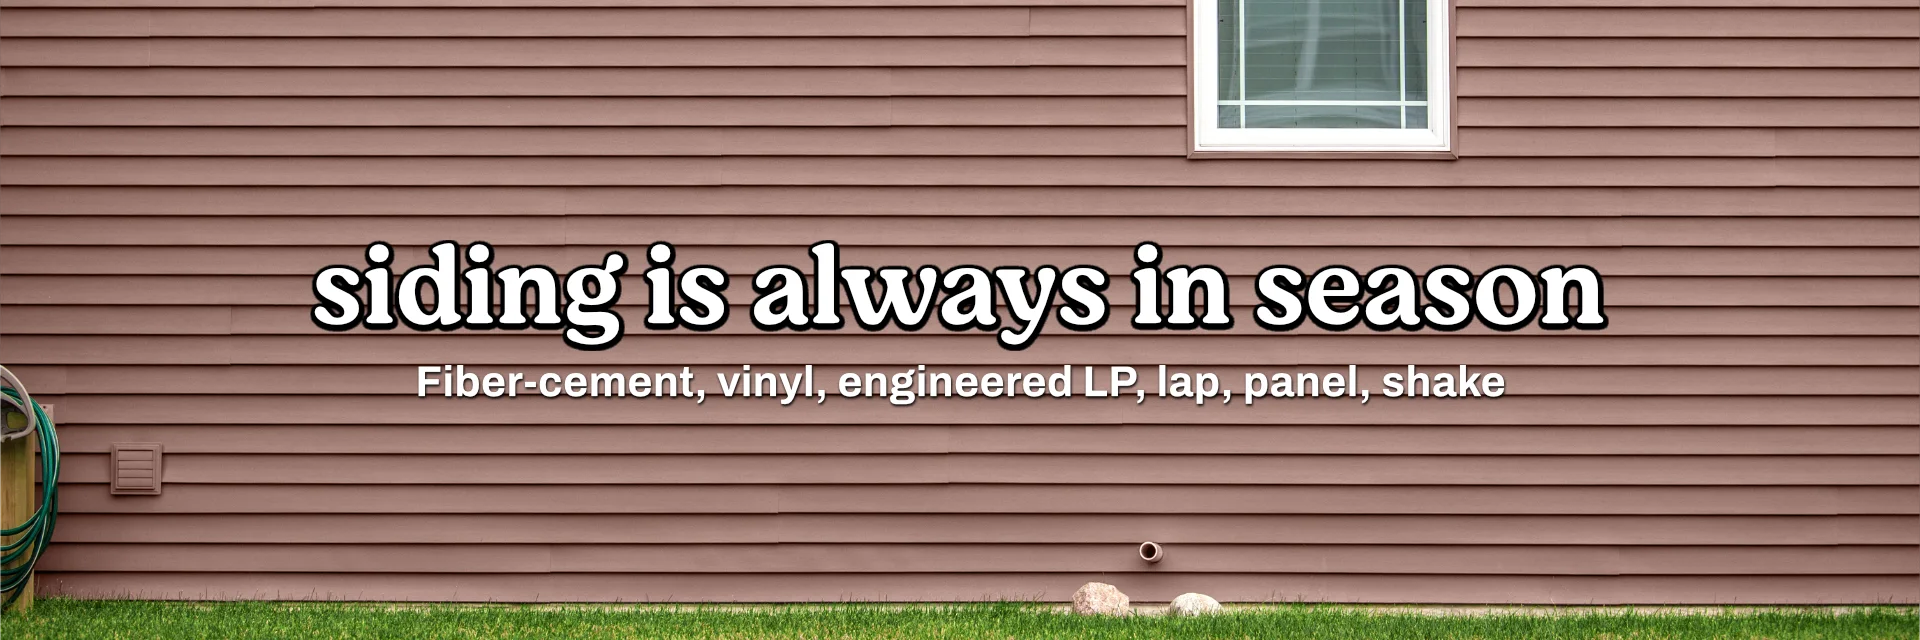 Siding is always in season! We stock fiber-cement, vinyl, LP, lap, panel, and shake options!